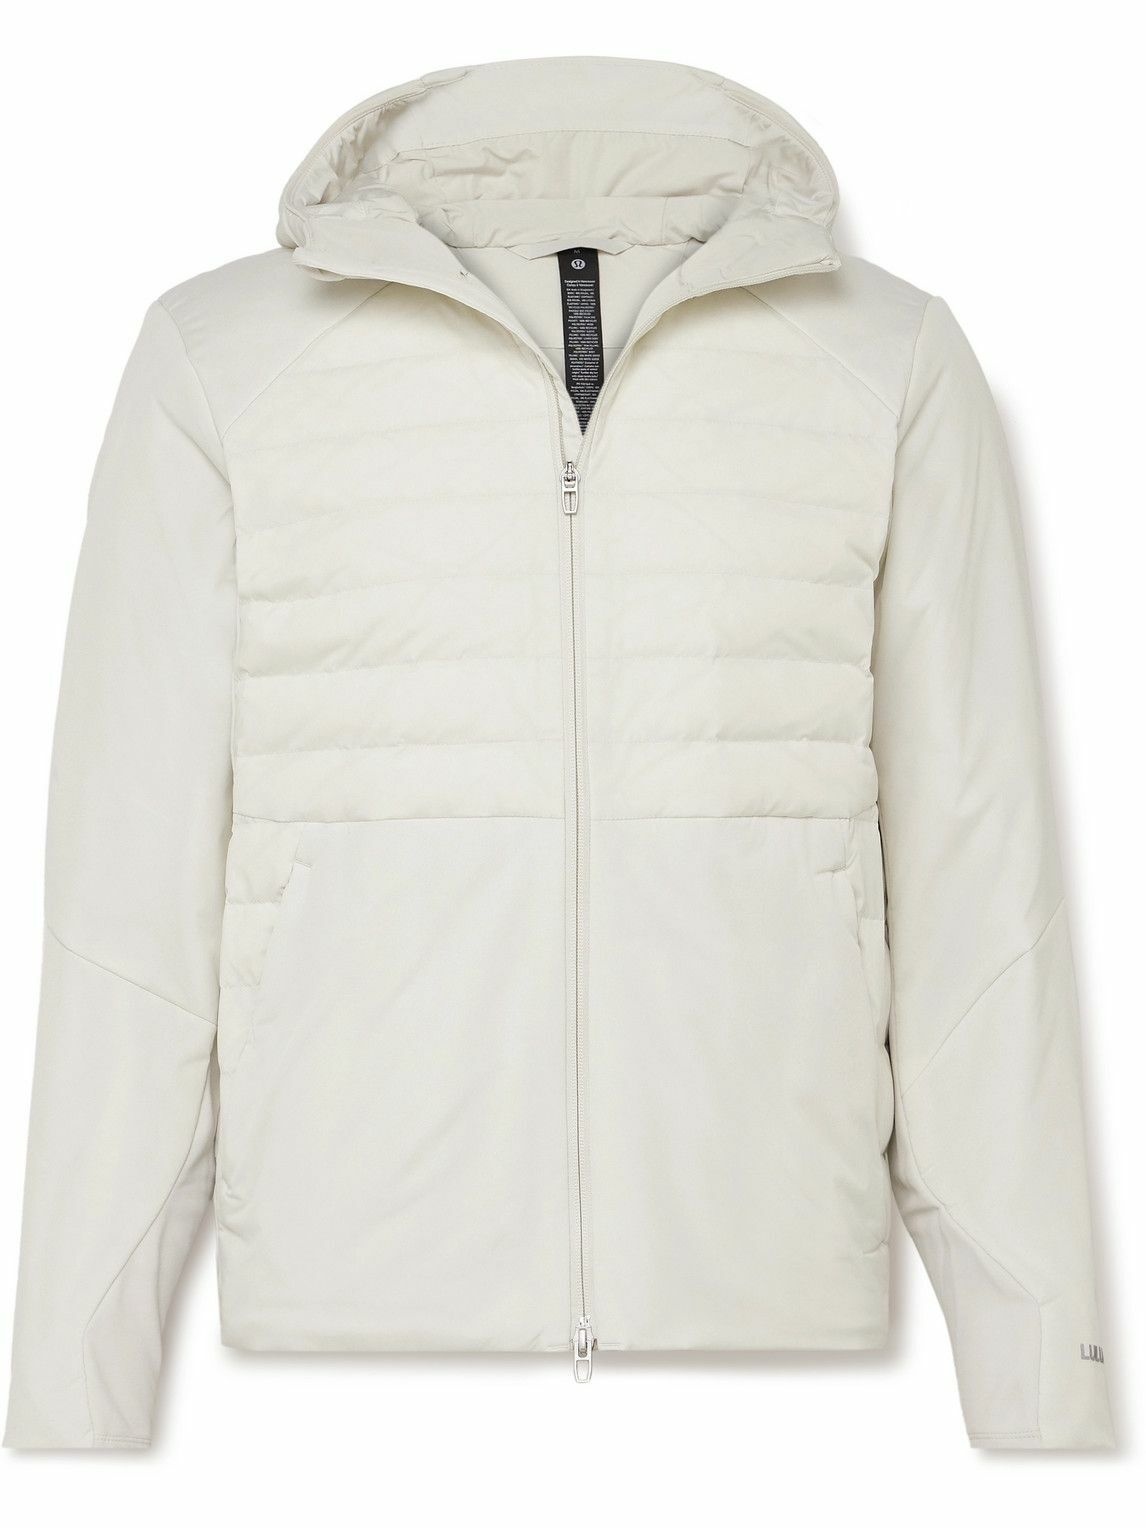 lululemon WARP PACKABLE CHAMBRAY - Outdoor jacket - bone/white - Zalando.de